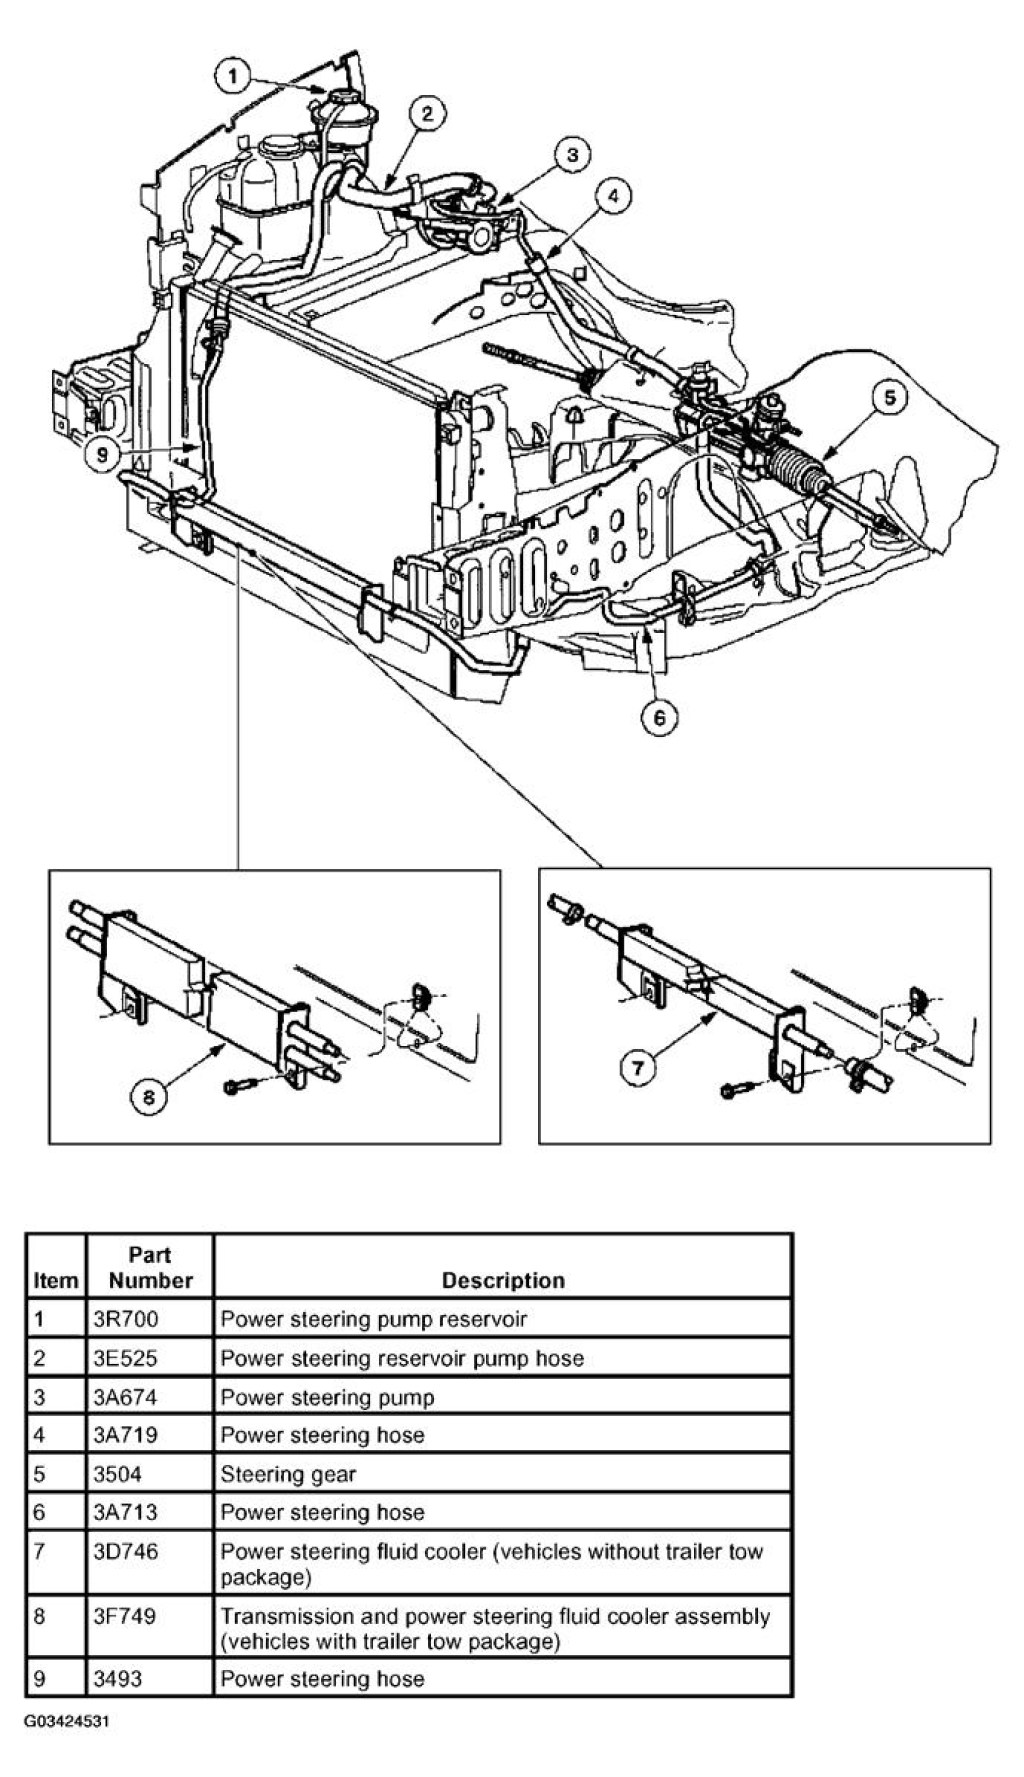 Picture of: FORD WINDSTAR Service Repair Manual by kmdwisbnvmk – Issuu